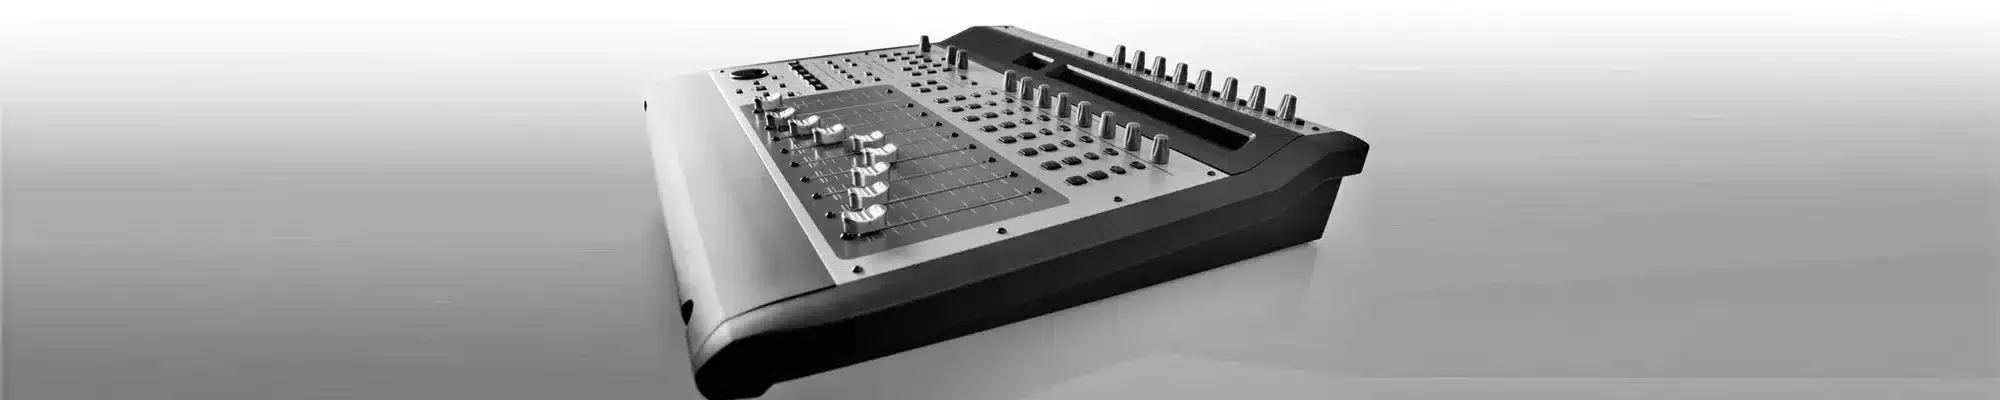 mixer-controller-concept-model-industrial-design-dj